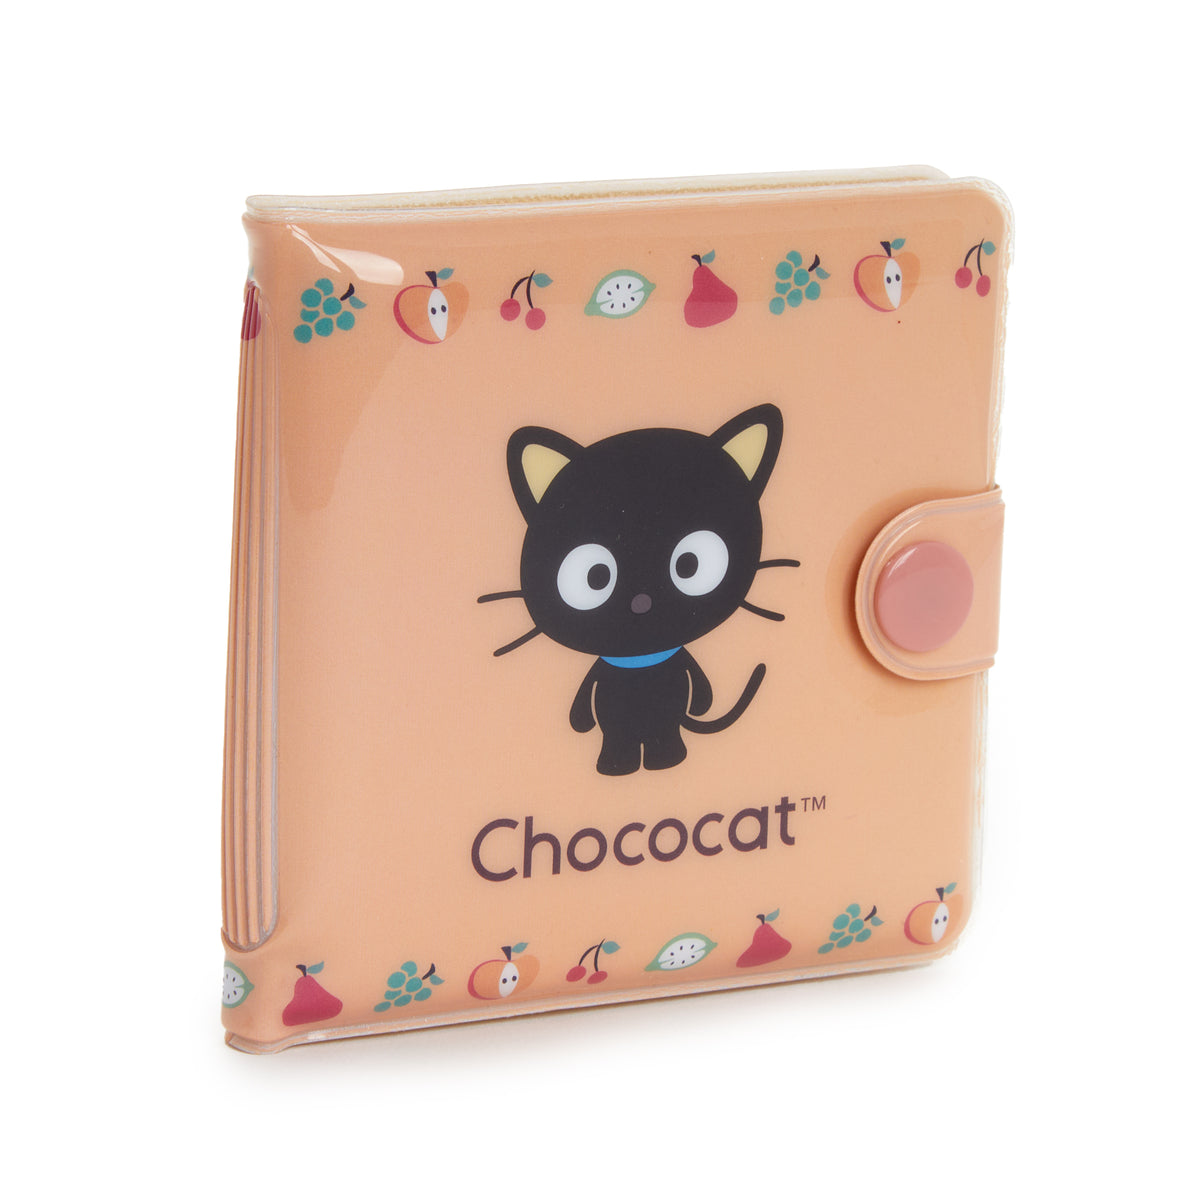 Chococat Vinyl Snap Wallet Bags HUNET GLOBAL CREATIONS INC   